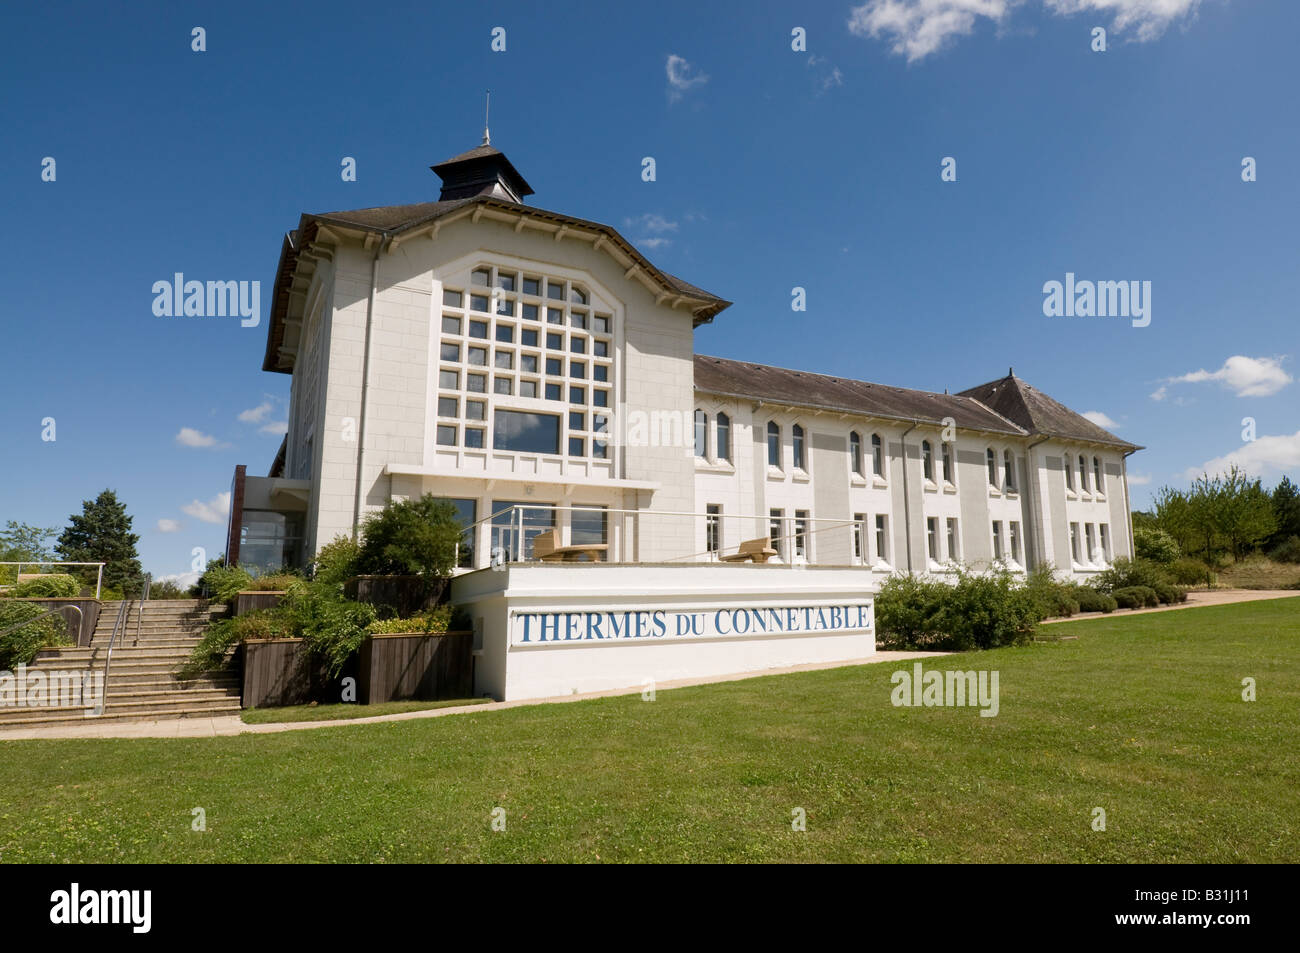 Thermes du Connetable health spa, La Roche Posay, Vienne, France. Stock Photo